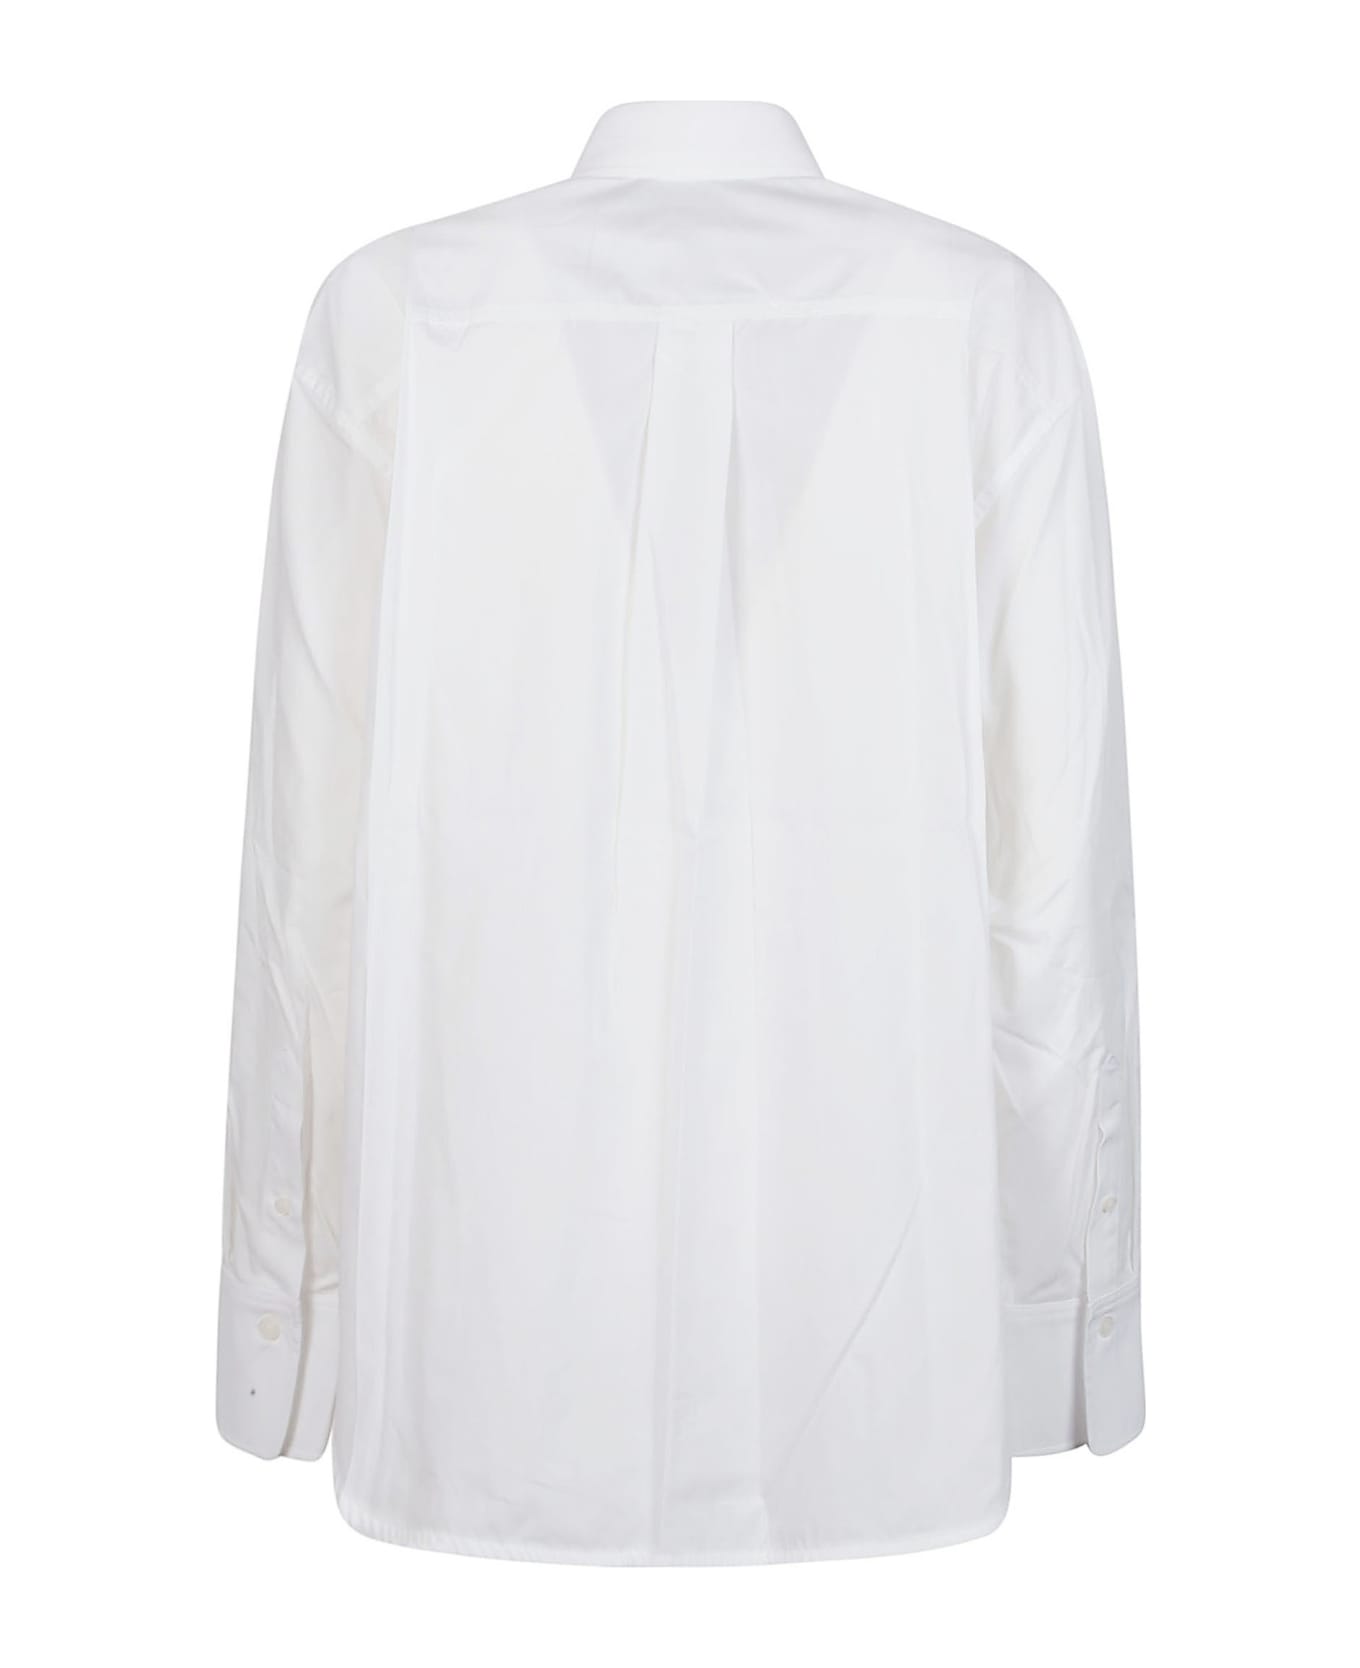 Victoria Beckham Oversized Long Sleeve Shirt - White シャツ